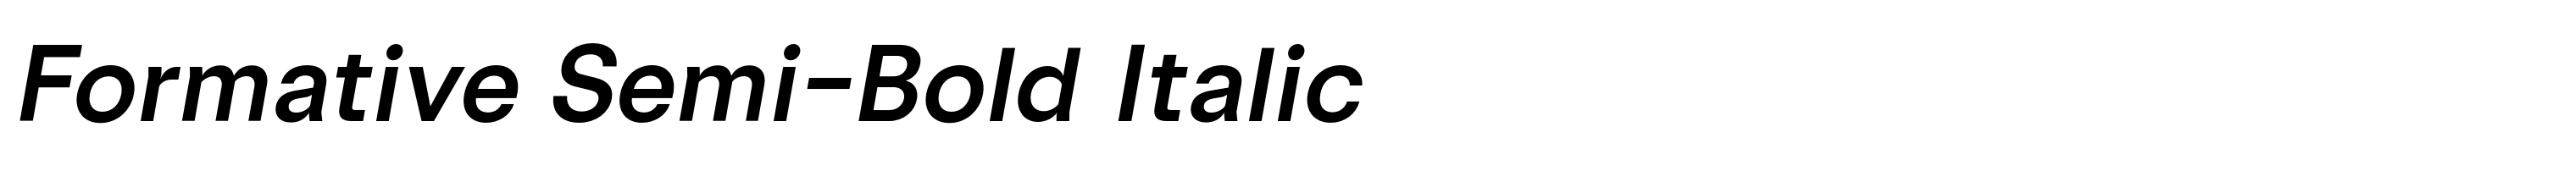 Formative Semi-Bold Italic